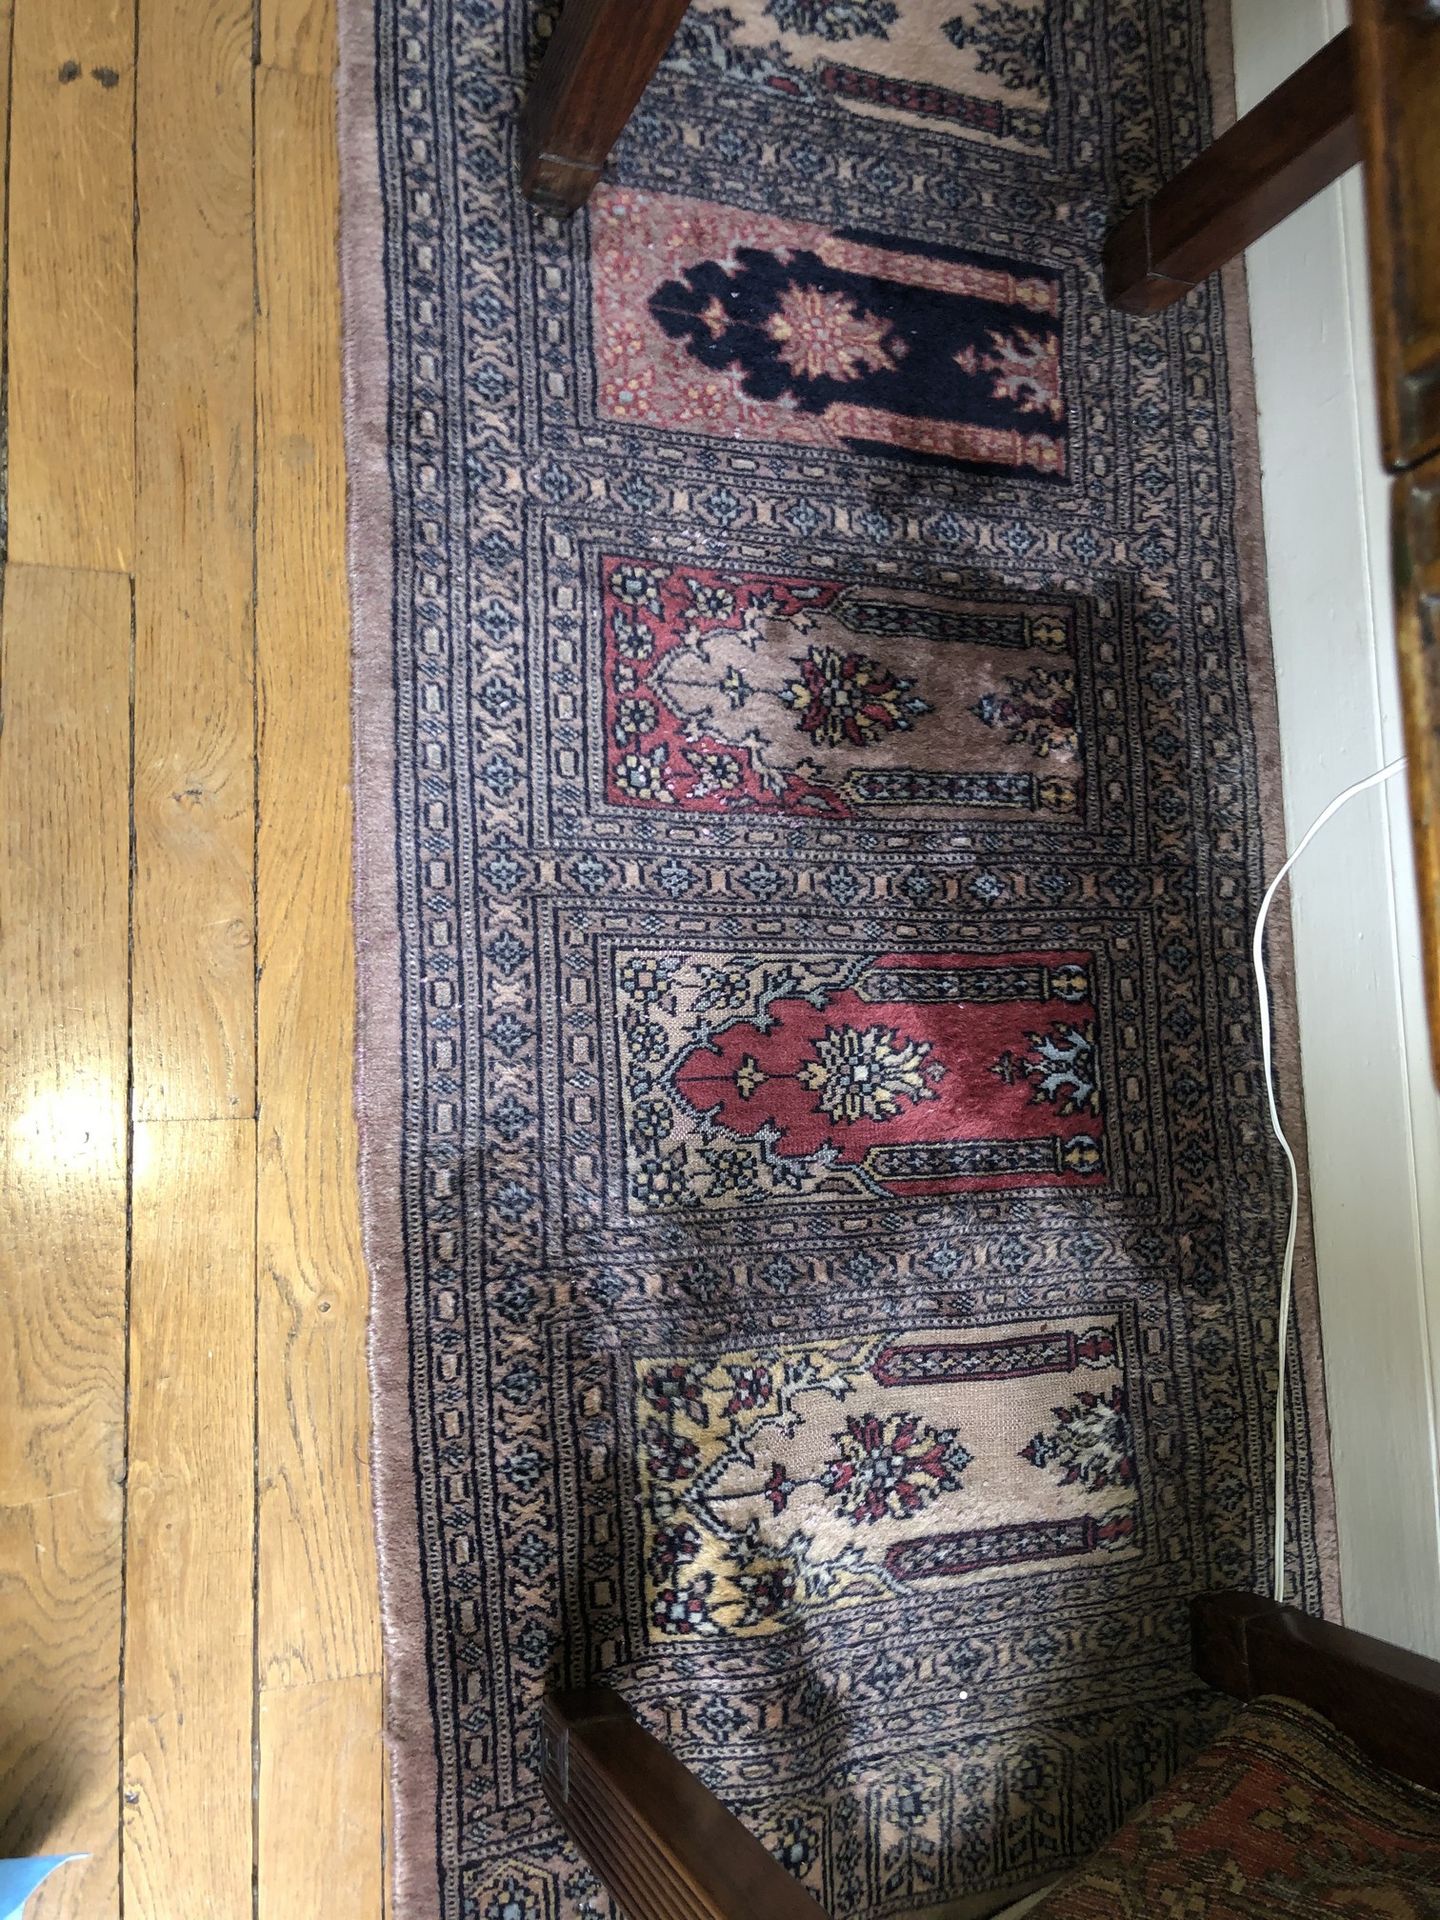 Null 有六个米拉布图案的地毯

巴基斯坦, 20世纪

200 x 70厘米（约）。